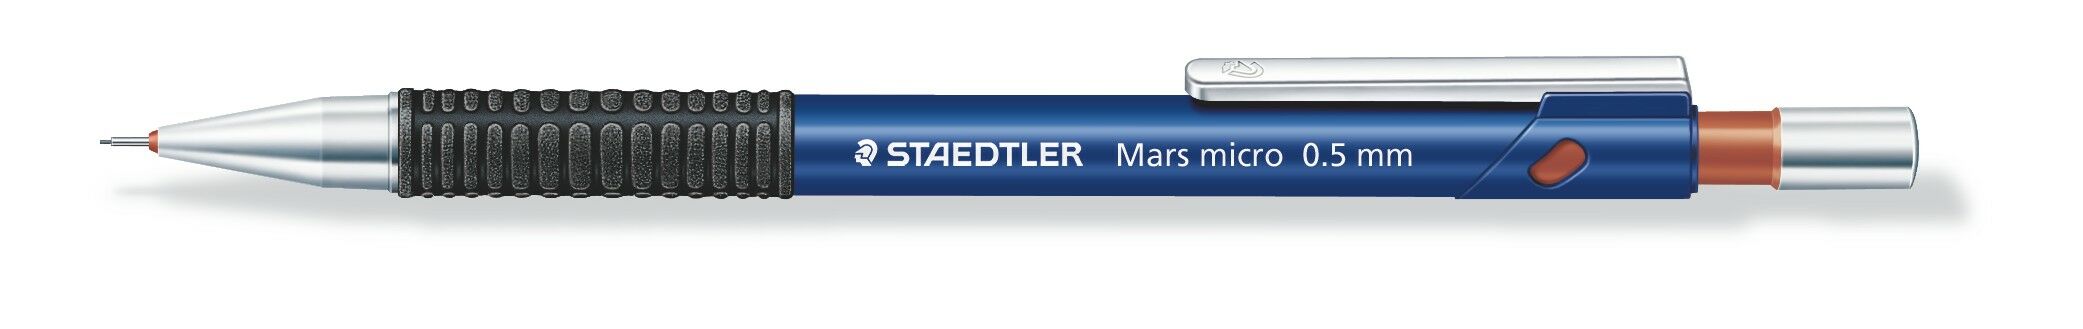 STAEDTLER MARS Feinmine Marsmicro 0,3 B 12 Minen im Etui 